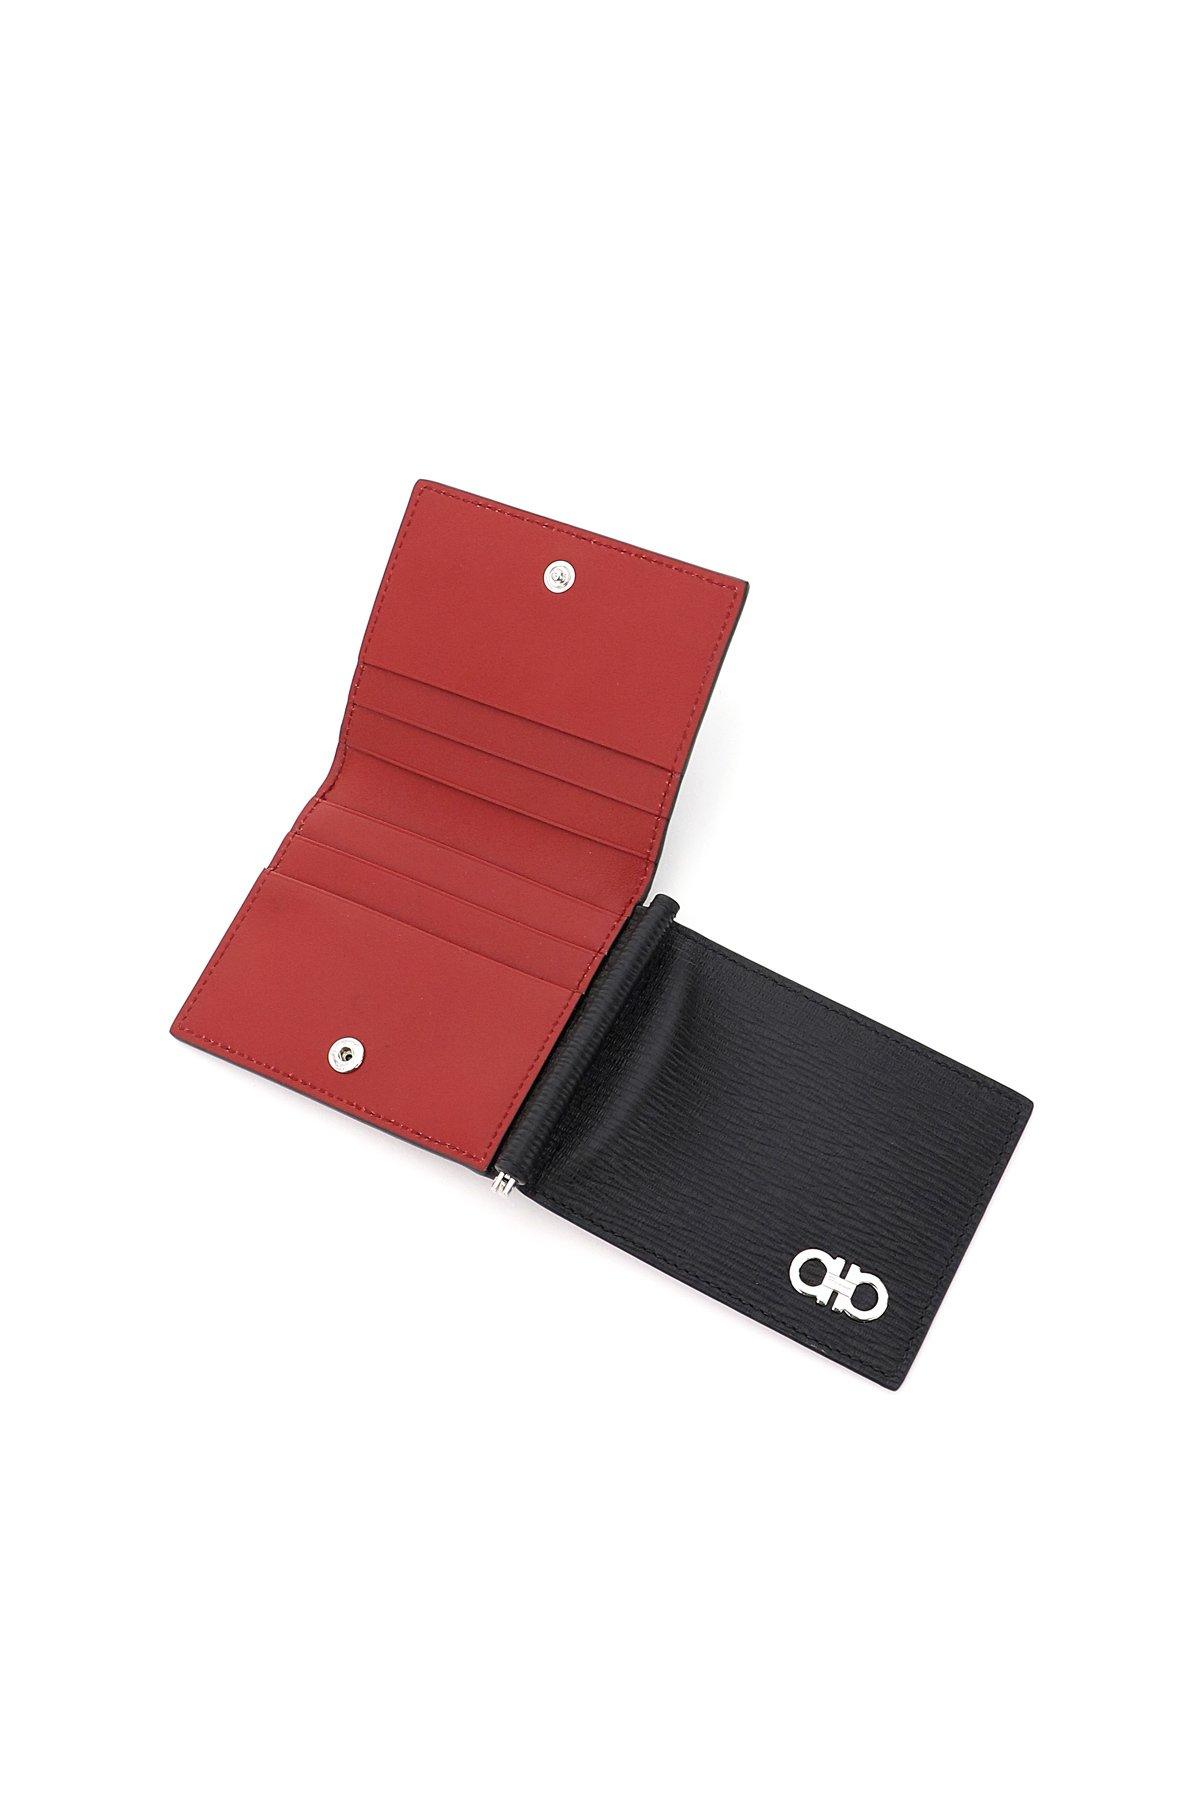 Salvatore Ferragamo Mens Black/Red Card Holder Wallet for Sale in